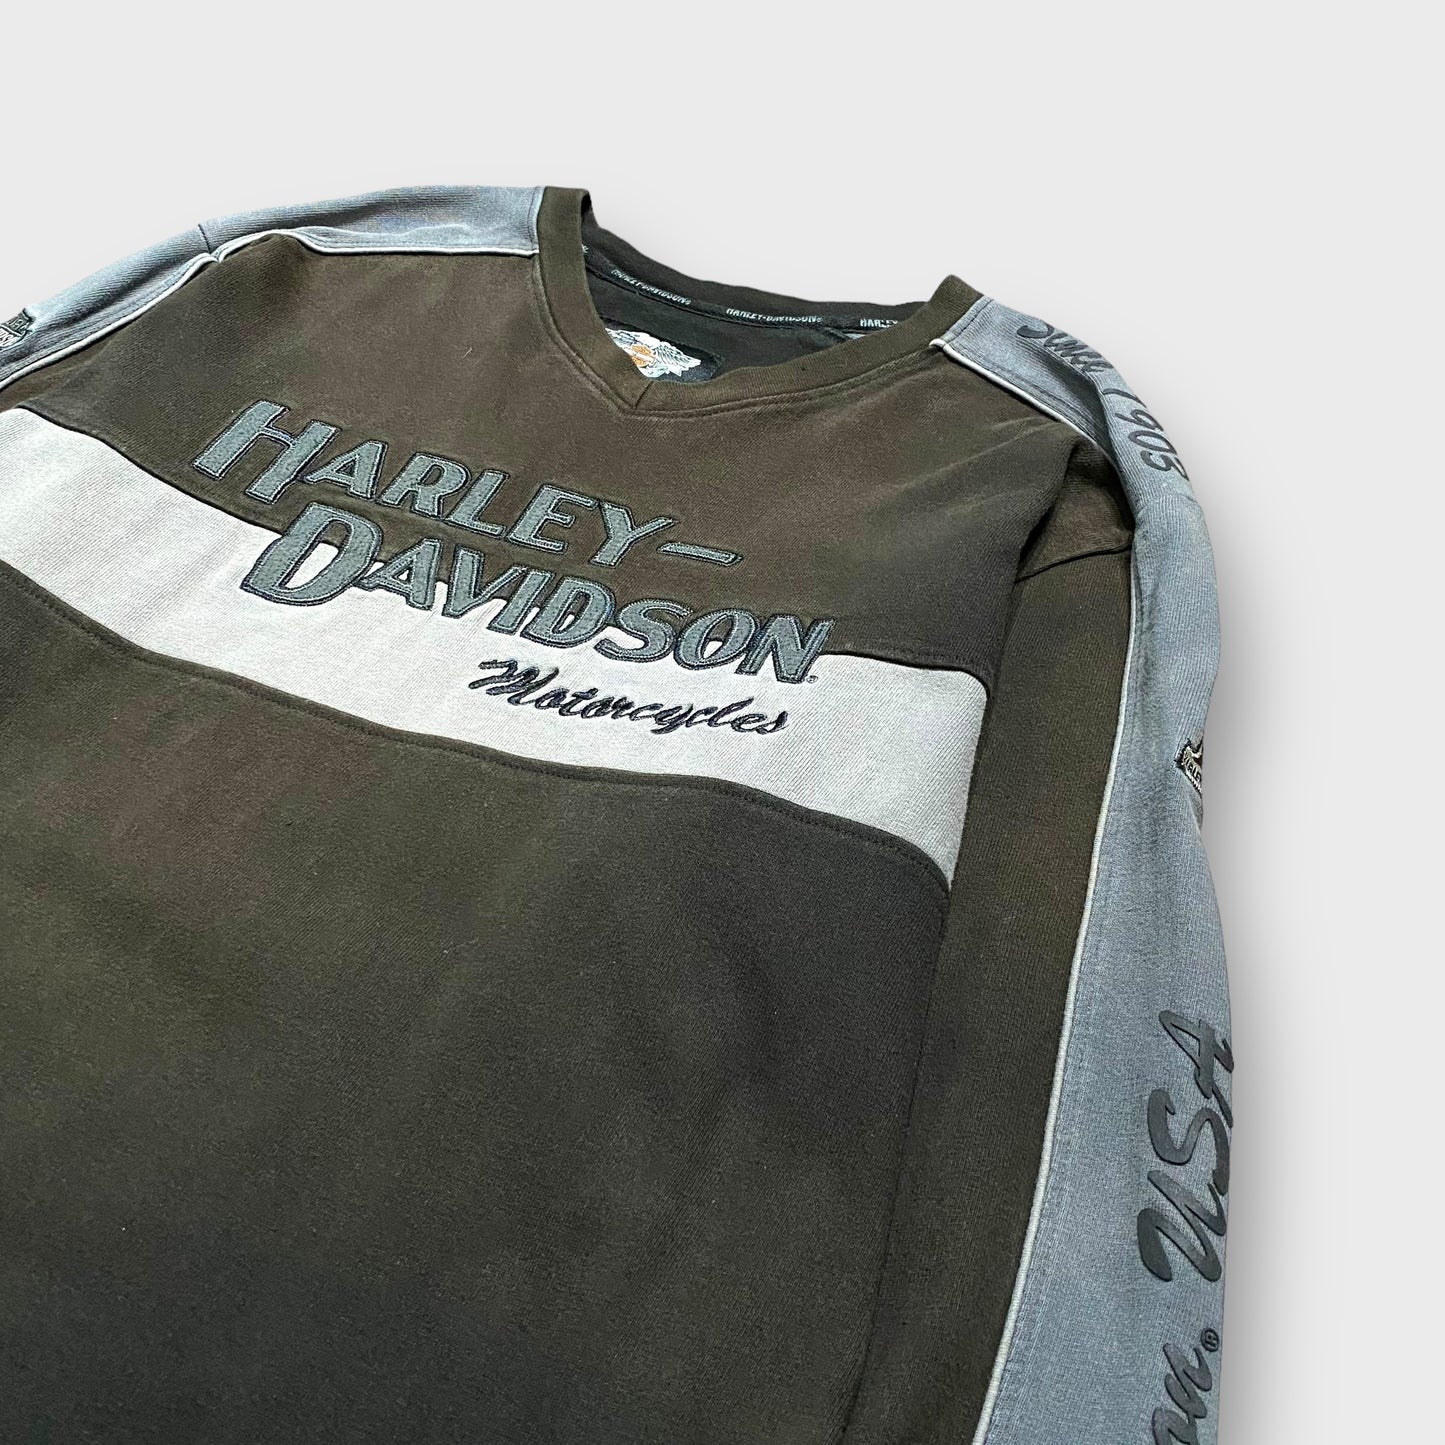 90's "Harley Davidson" Sweat